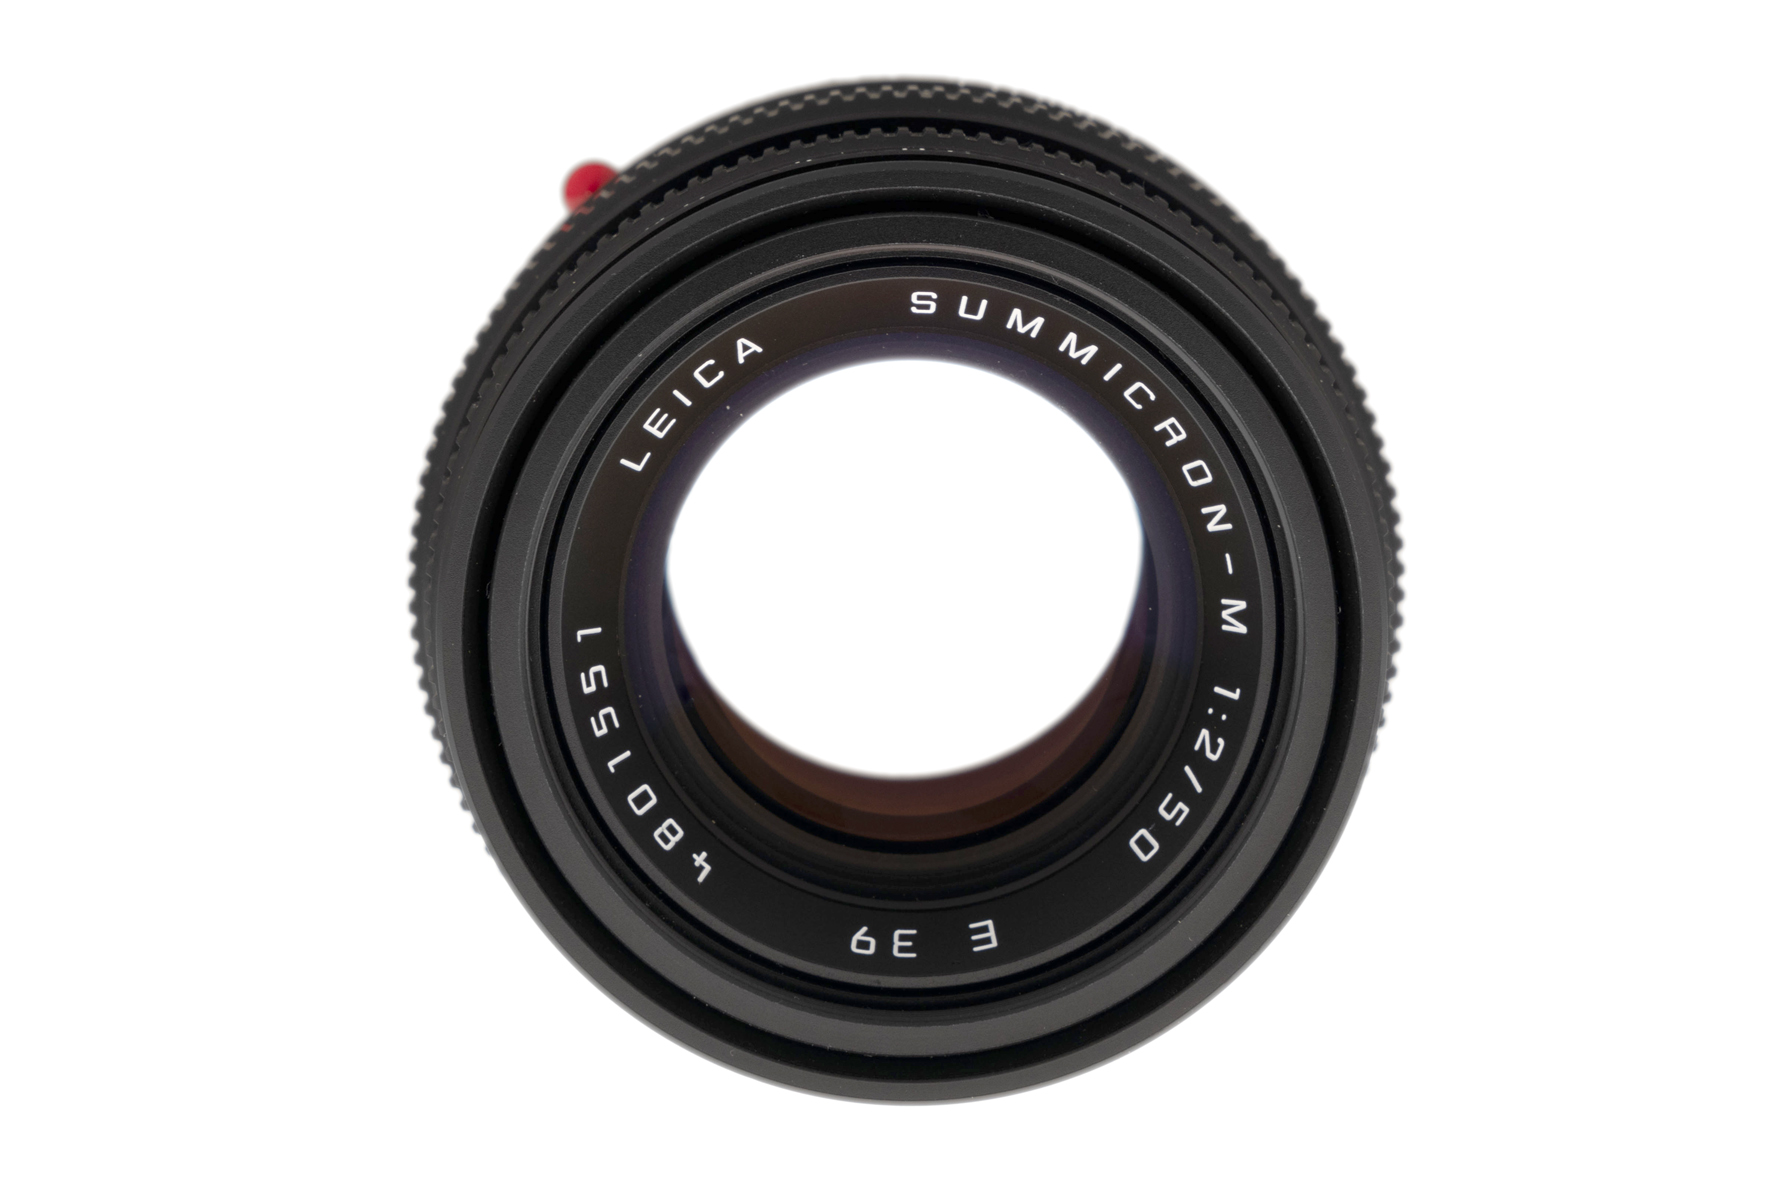 Leica Summicron-M 2,0/50mm schwarz